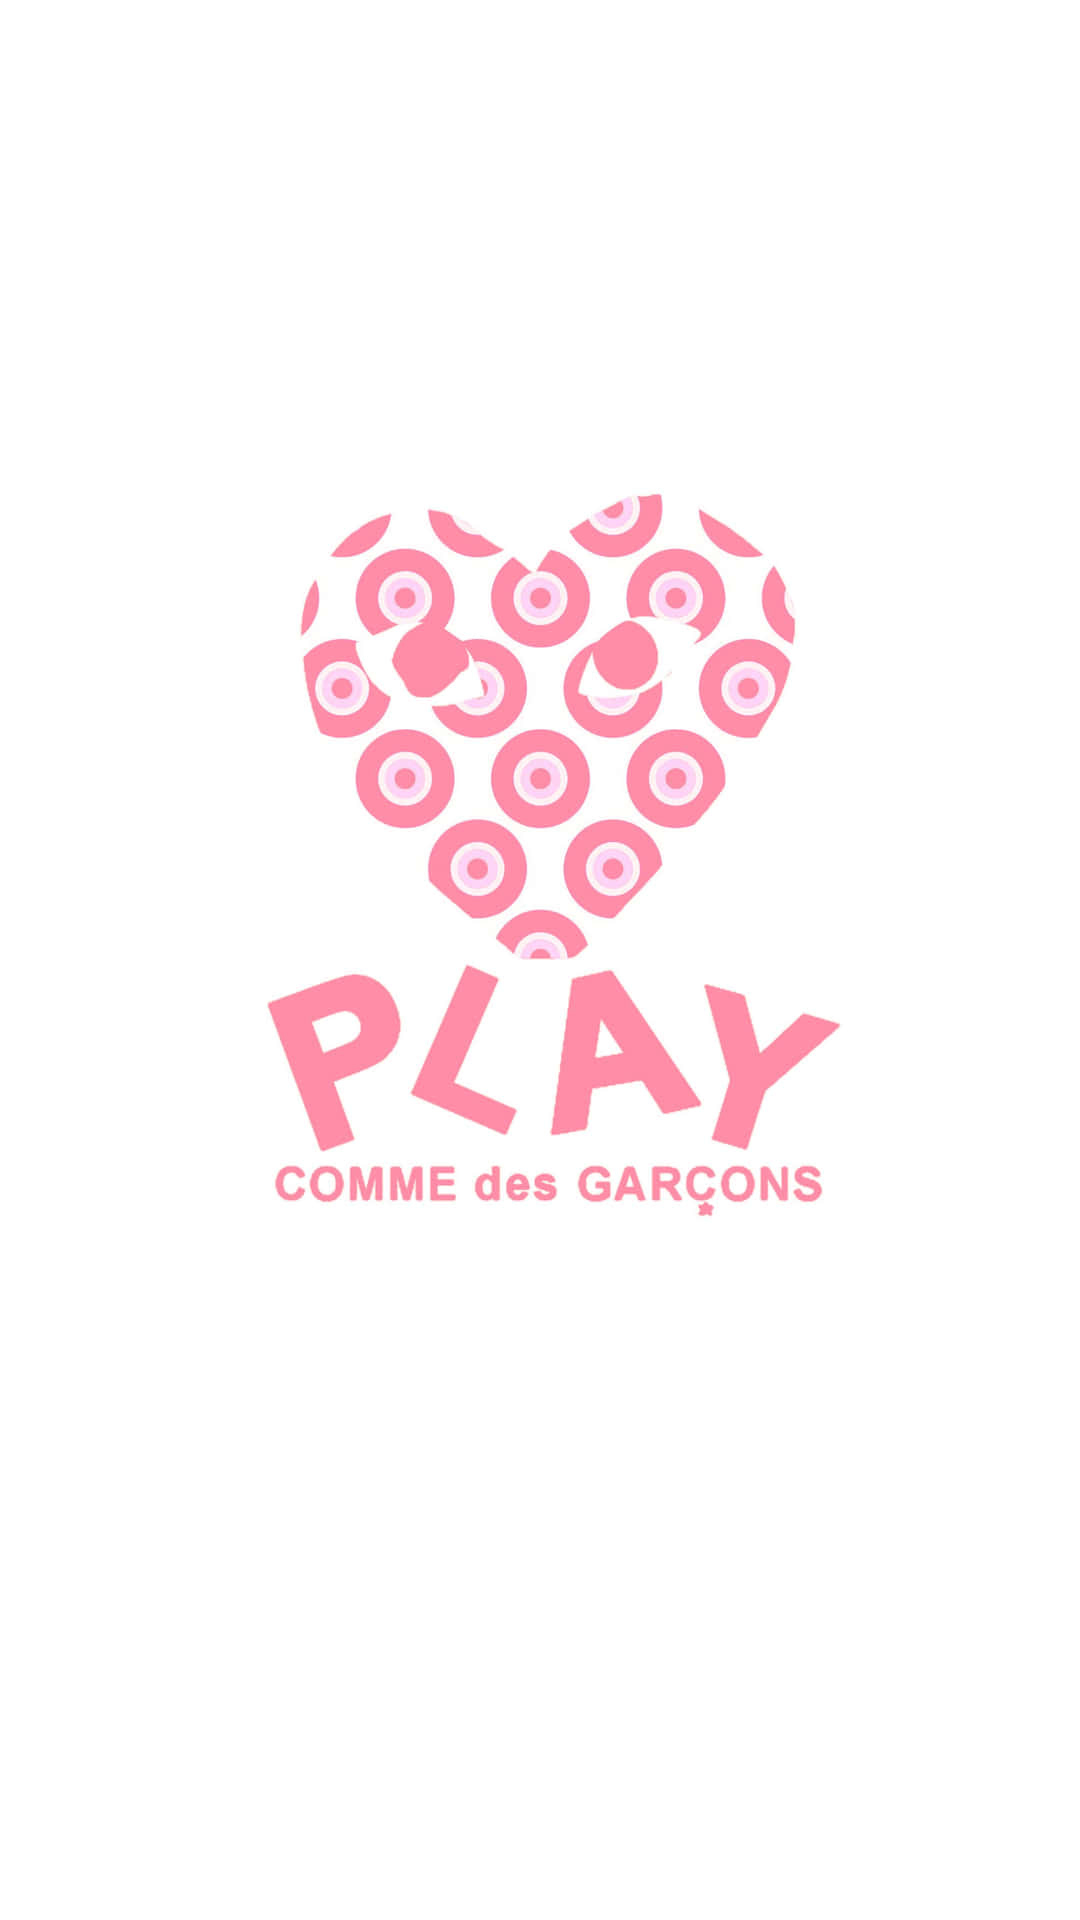 Cdg Logos  Graphic artist, Cdg logo, Play heart